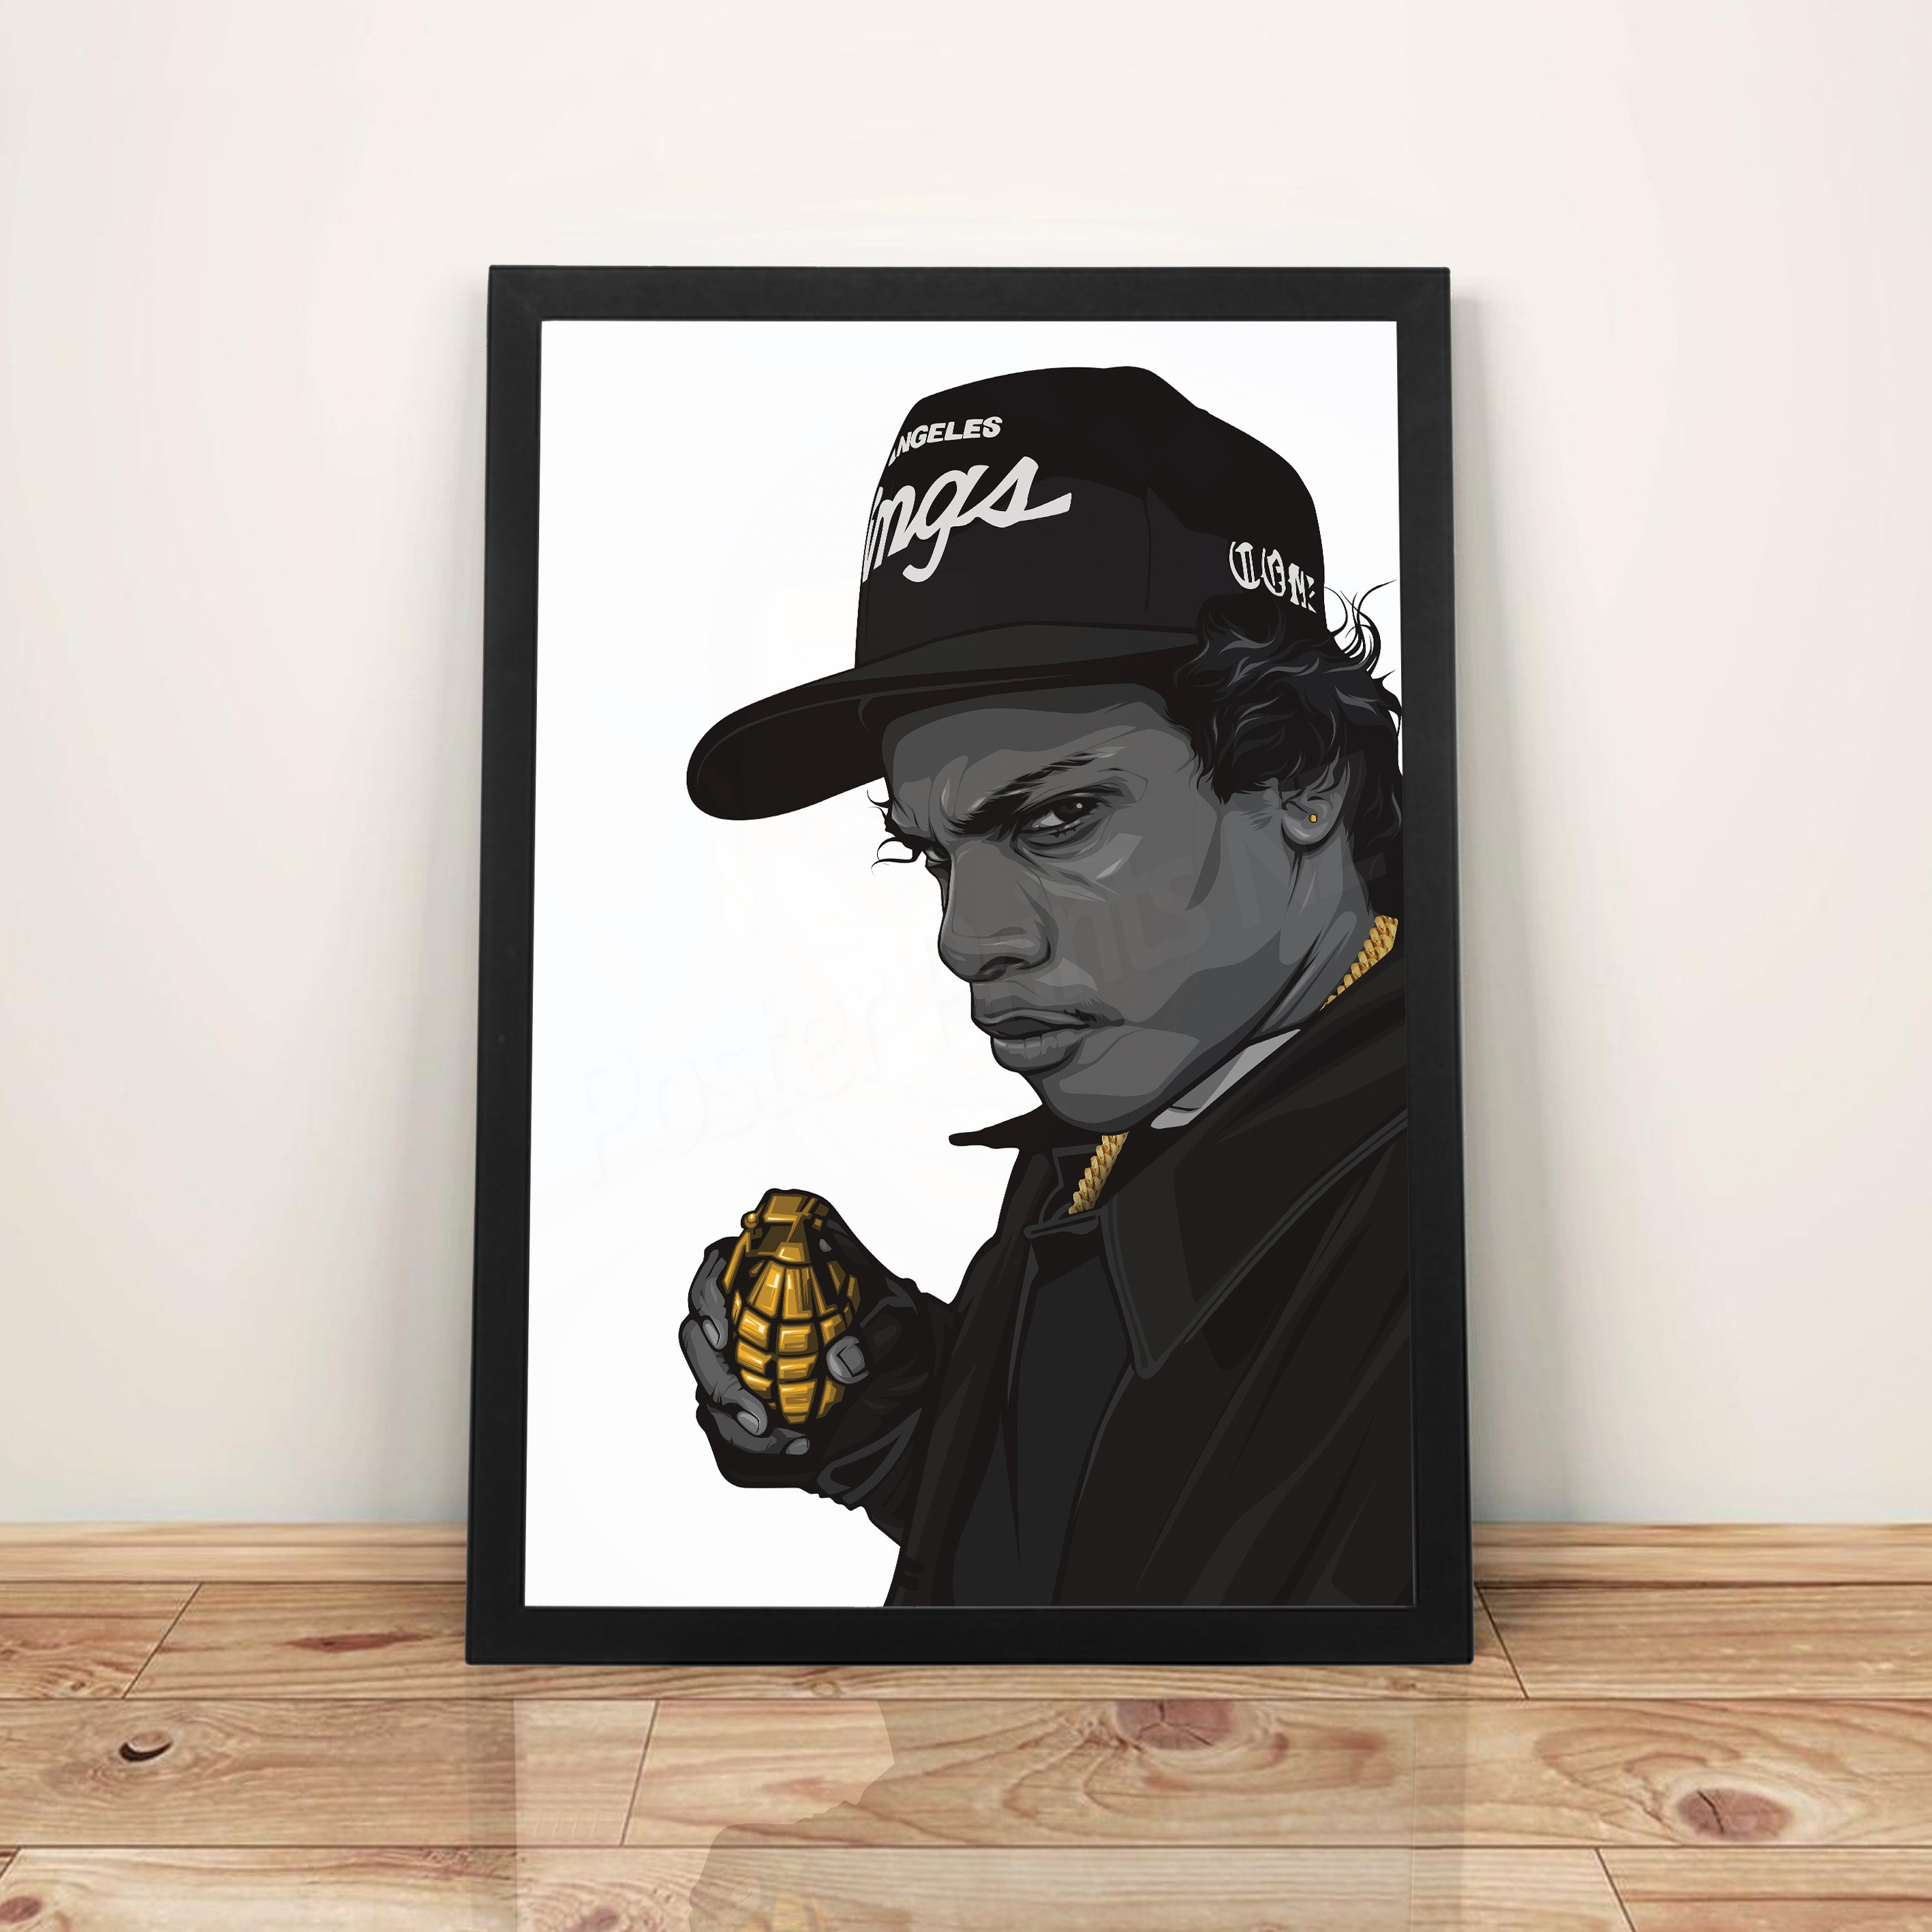 Eazy E 'Gold Edition' - A3 Framed Art Poster